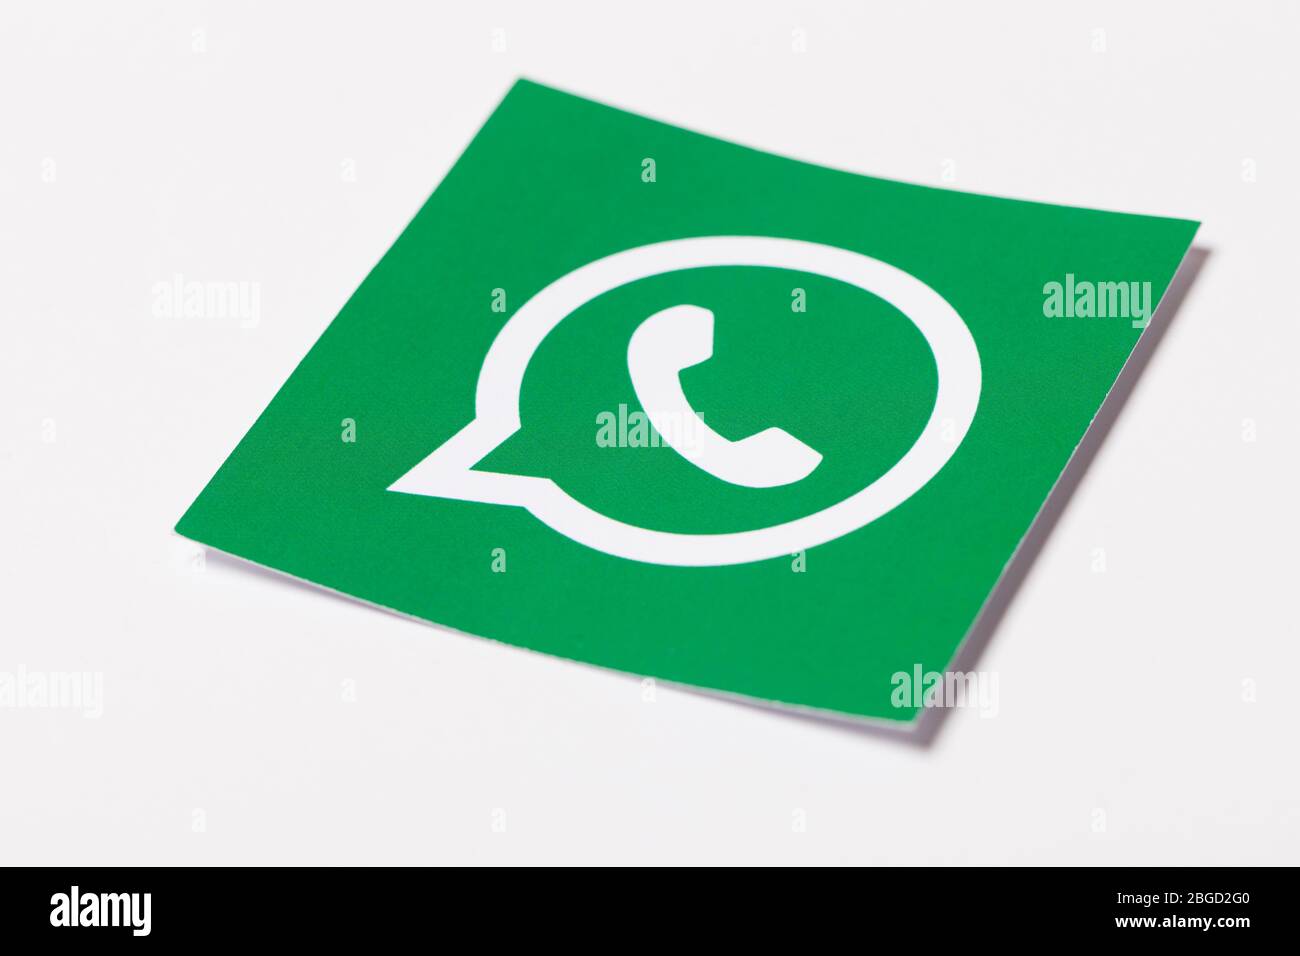 OXFORD, Großbritannien - FEB 21 2017: WhatsApp Social Media Messaging Logo auf Papier gedruckt Stockfoto